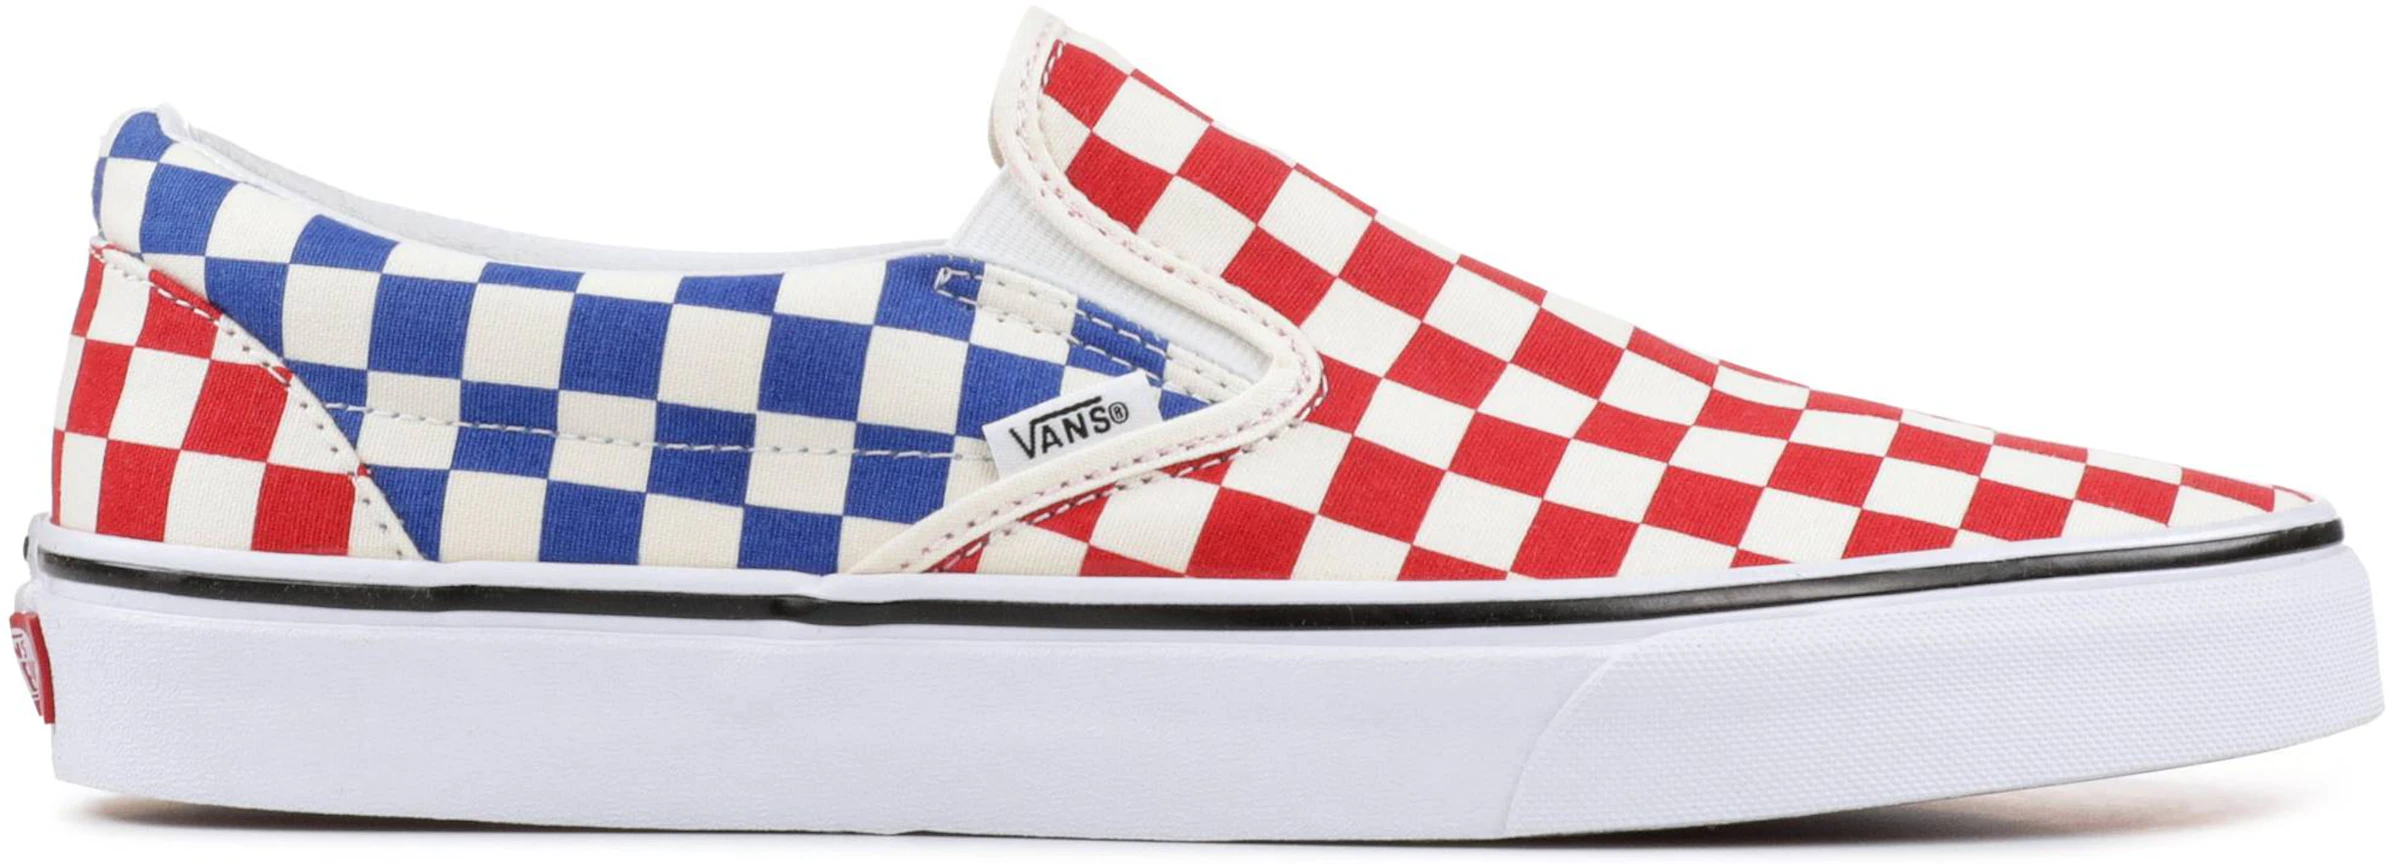 Vans Red And White Og Checkerboard Classic Slip-on Sneakers For Men ...